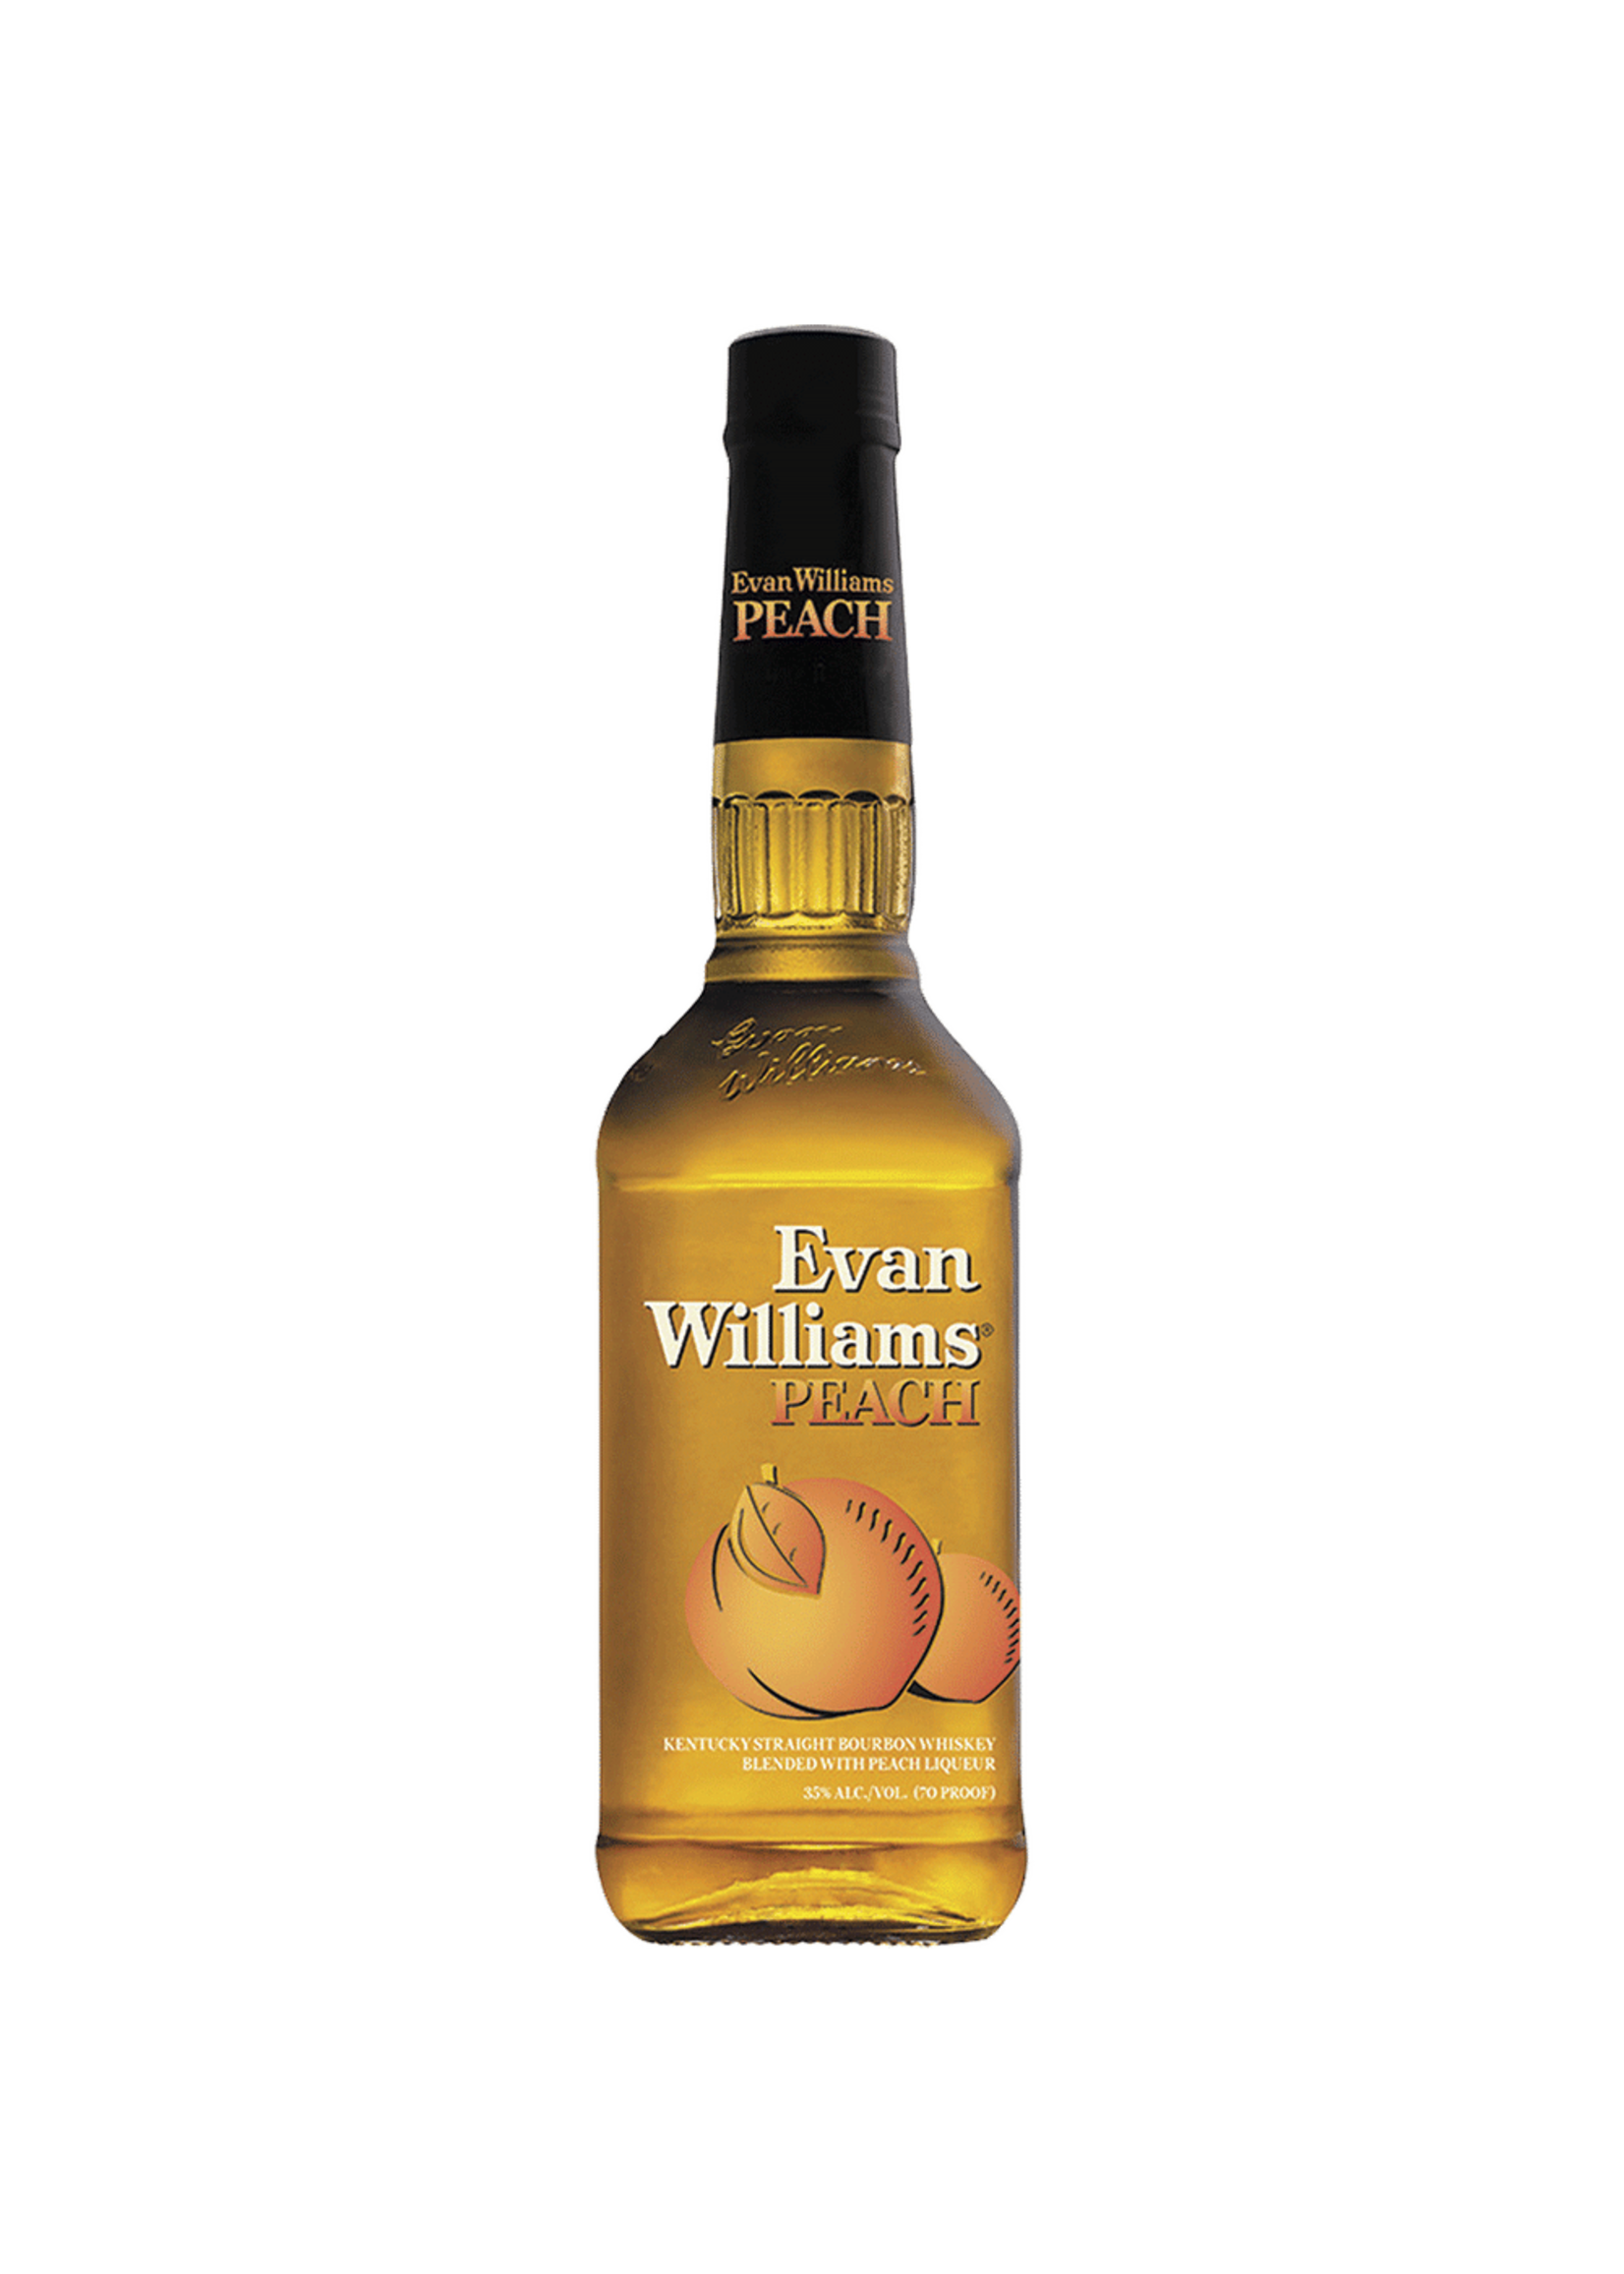 Evan Williams Bourbon Evan Williams Peach Flavored Whiskey 70Proof 750ml